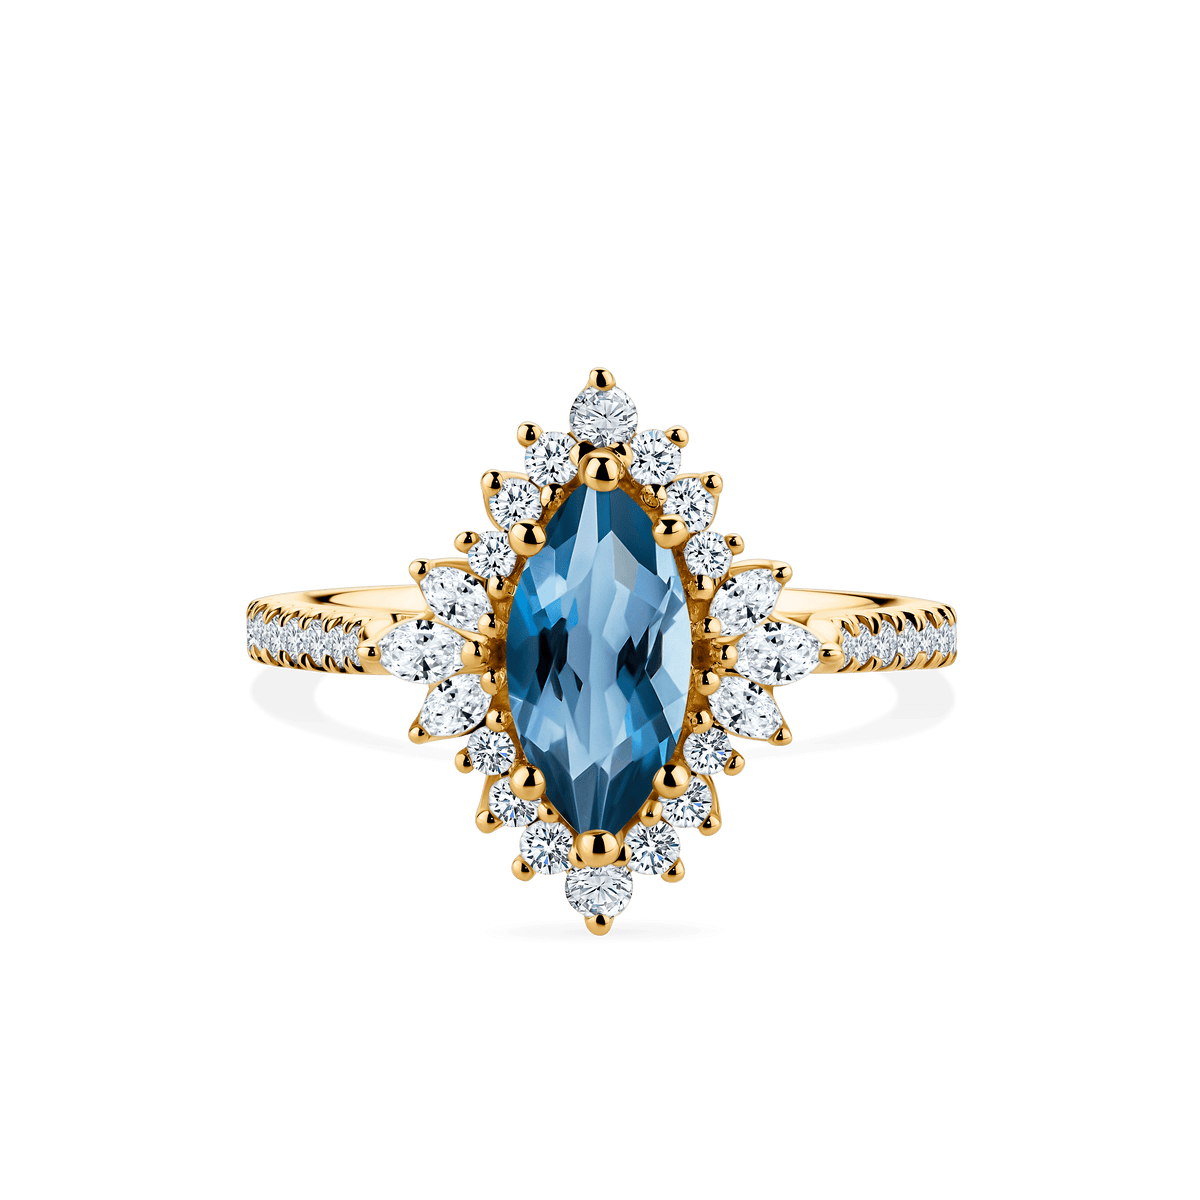 USD 39, Buy Blue Topaz Jewelry Online At Wholesale Price, 55312675 -  expatriates.com